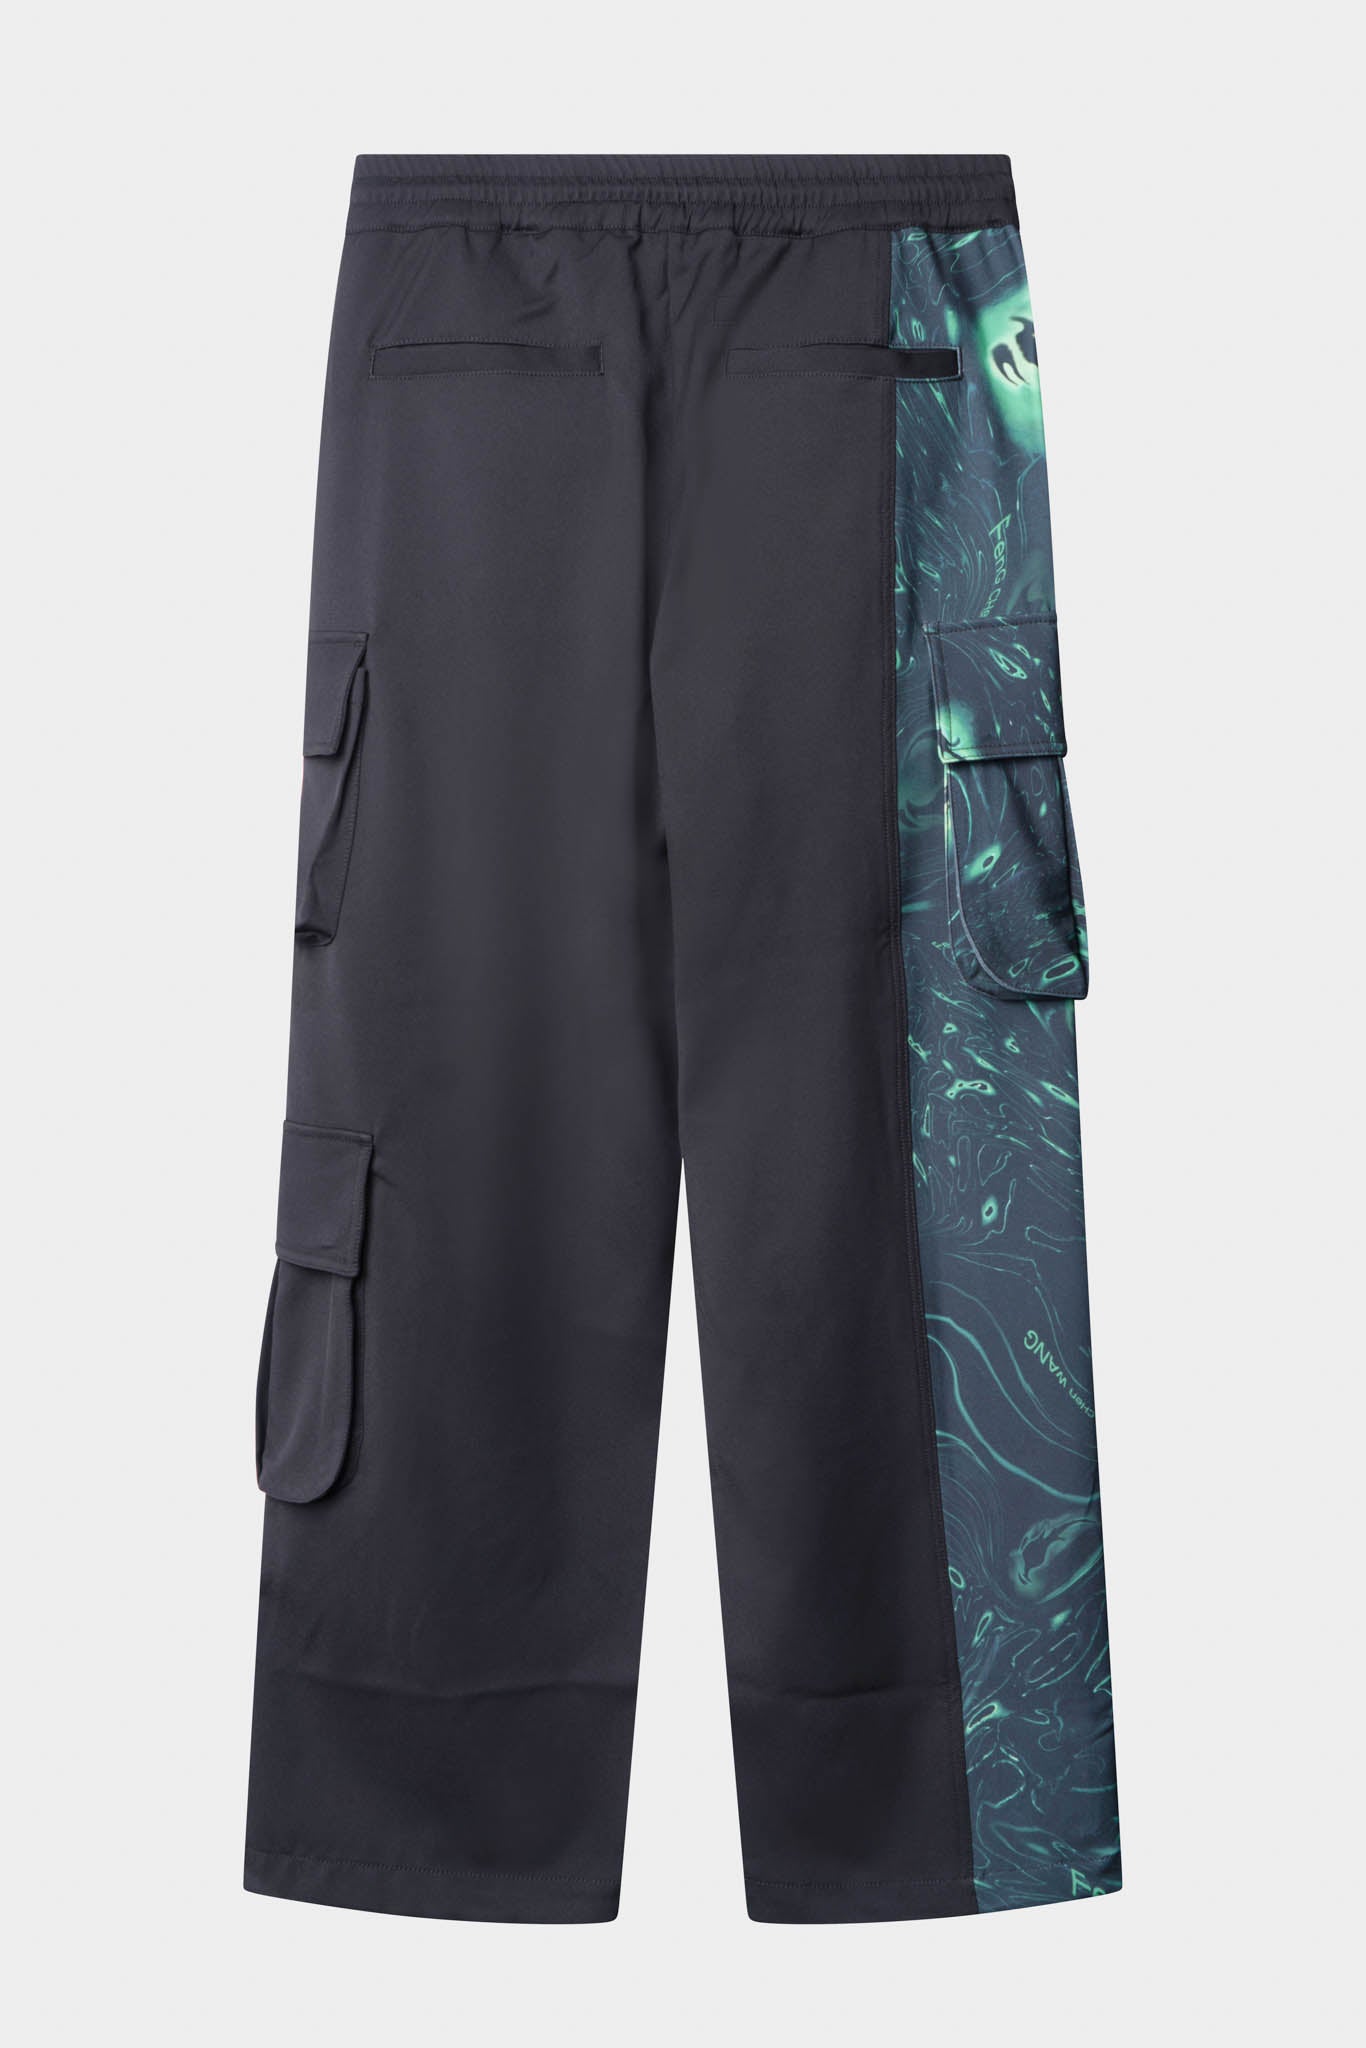 Selectshop FRAME - FENG CHEN WANG Lacquerware Print Cargo Pants Bottoms Dubai